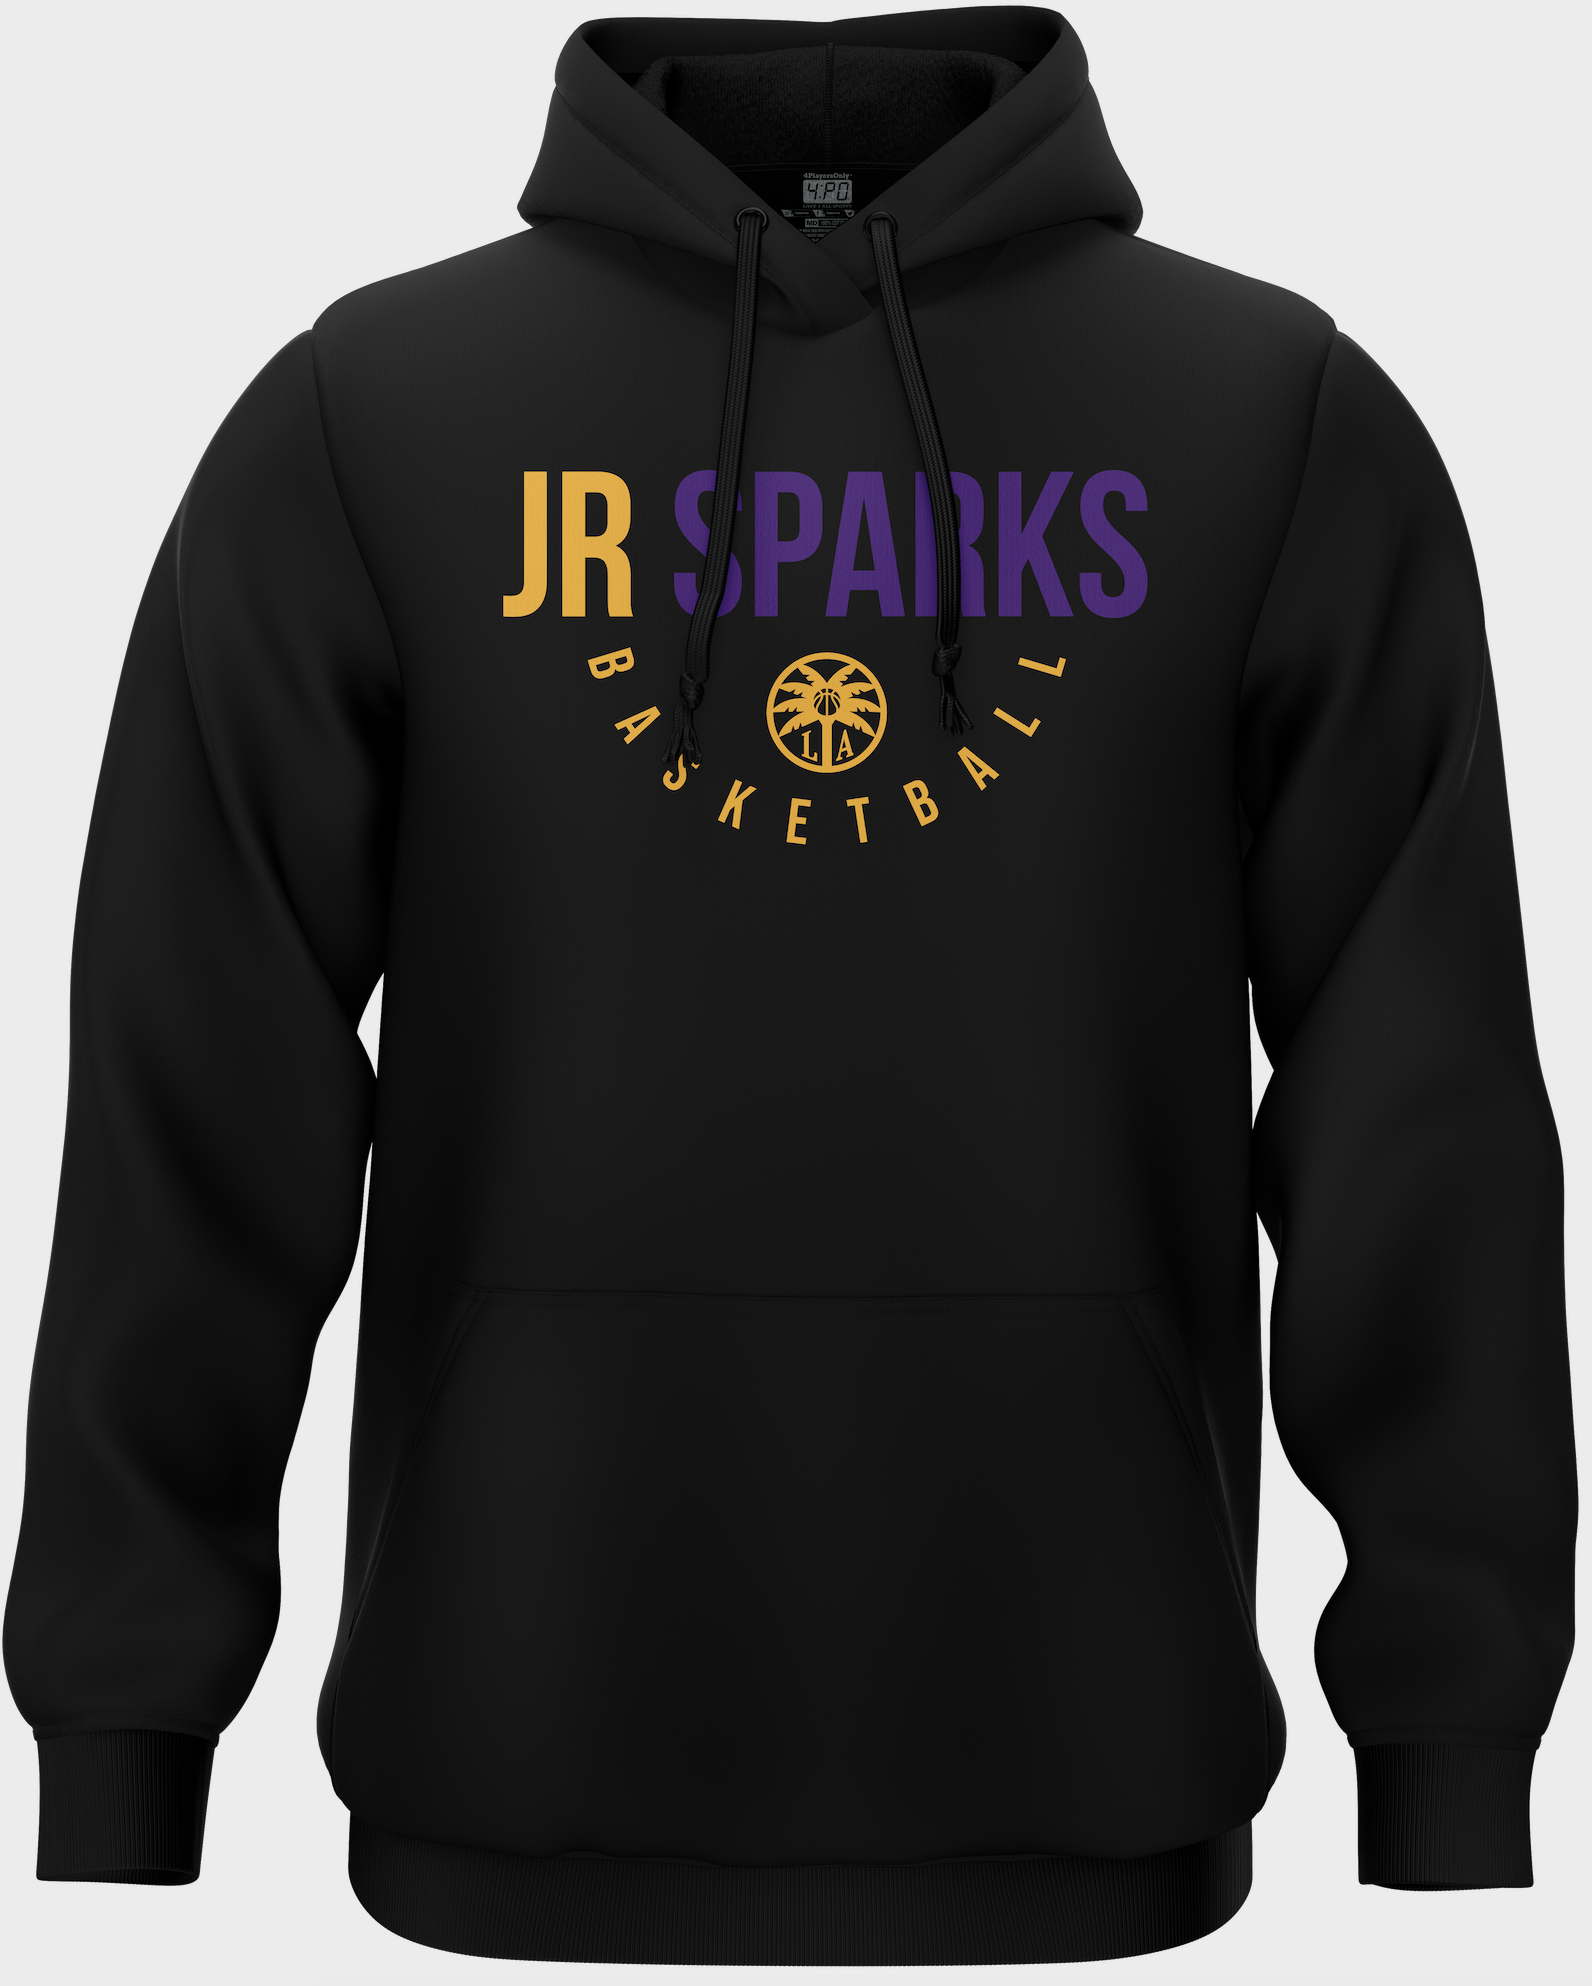 Sparks LASports, LLC